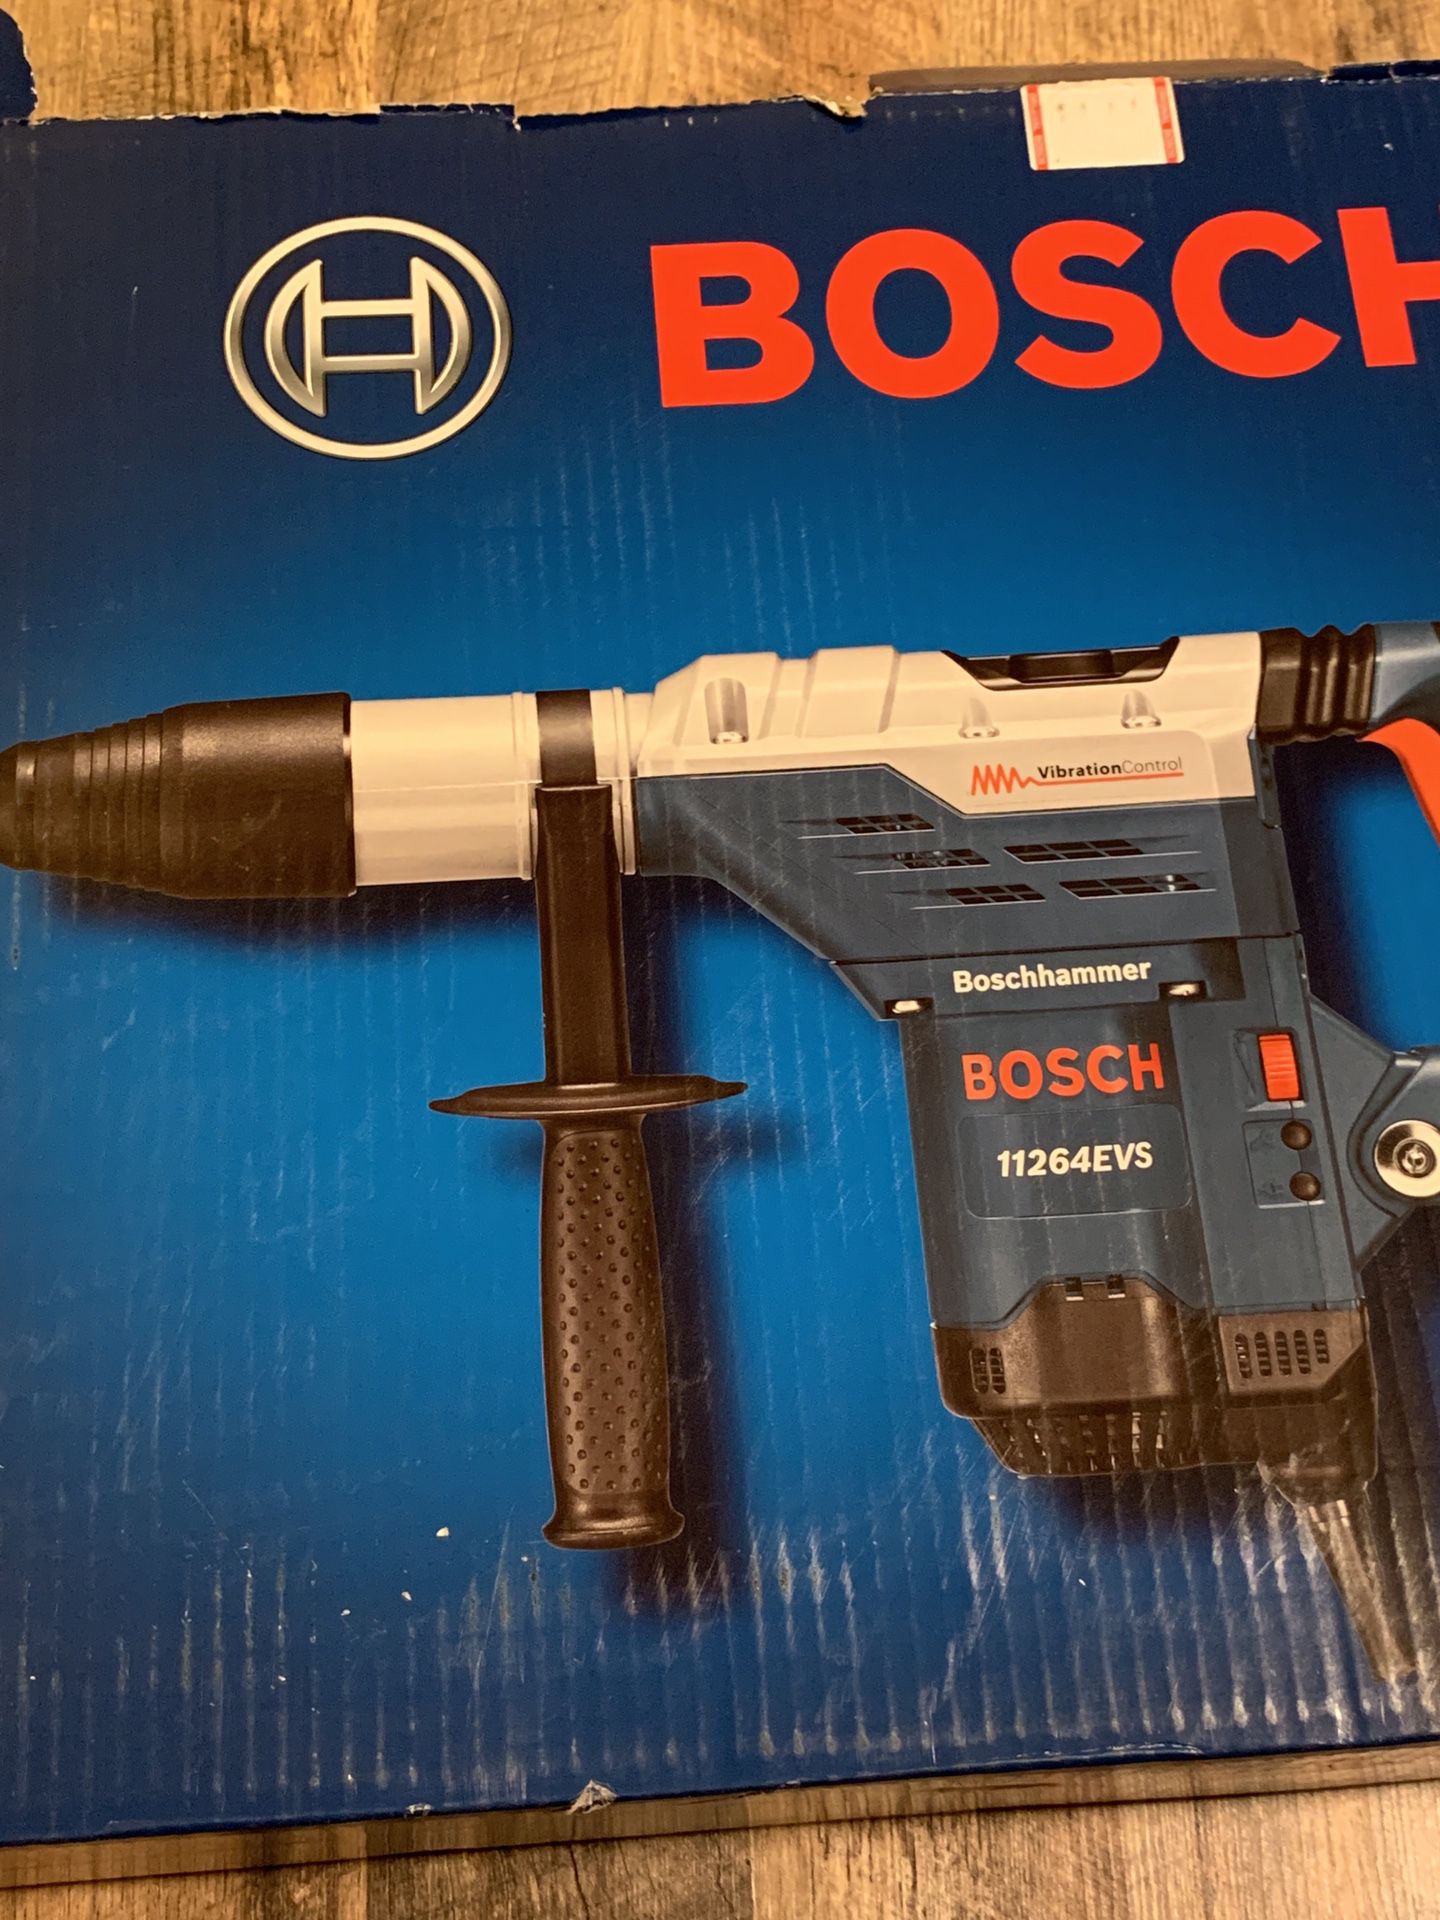 Bosch 13a rotary hammer